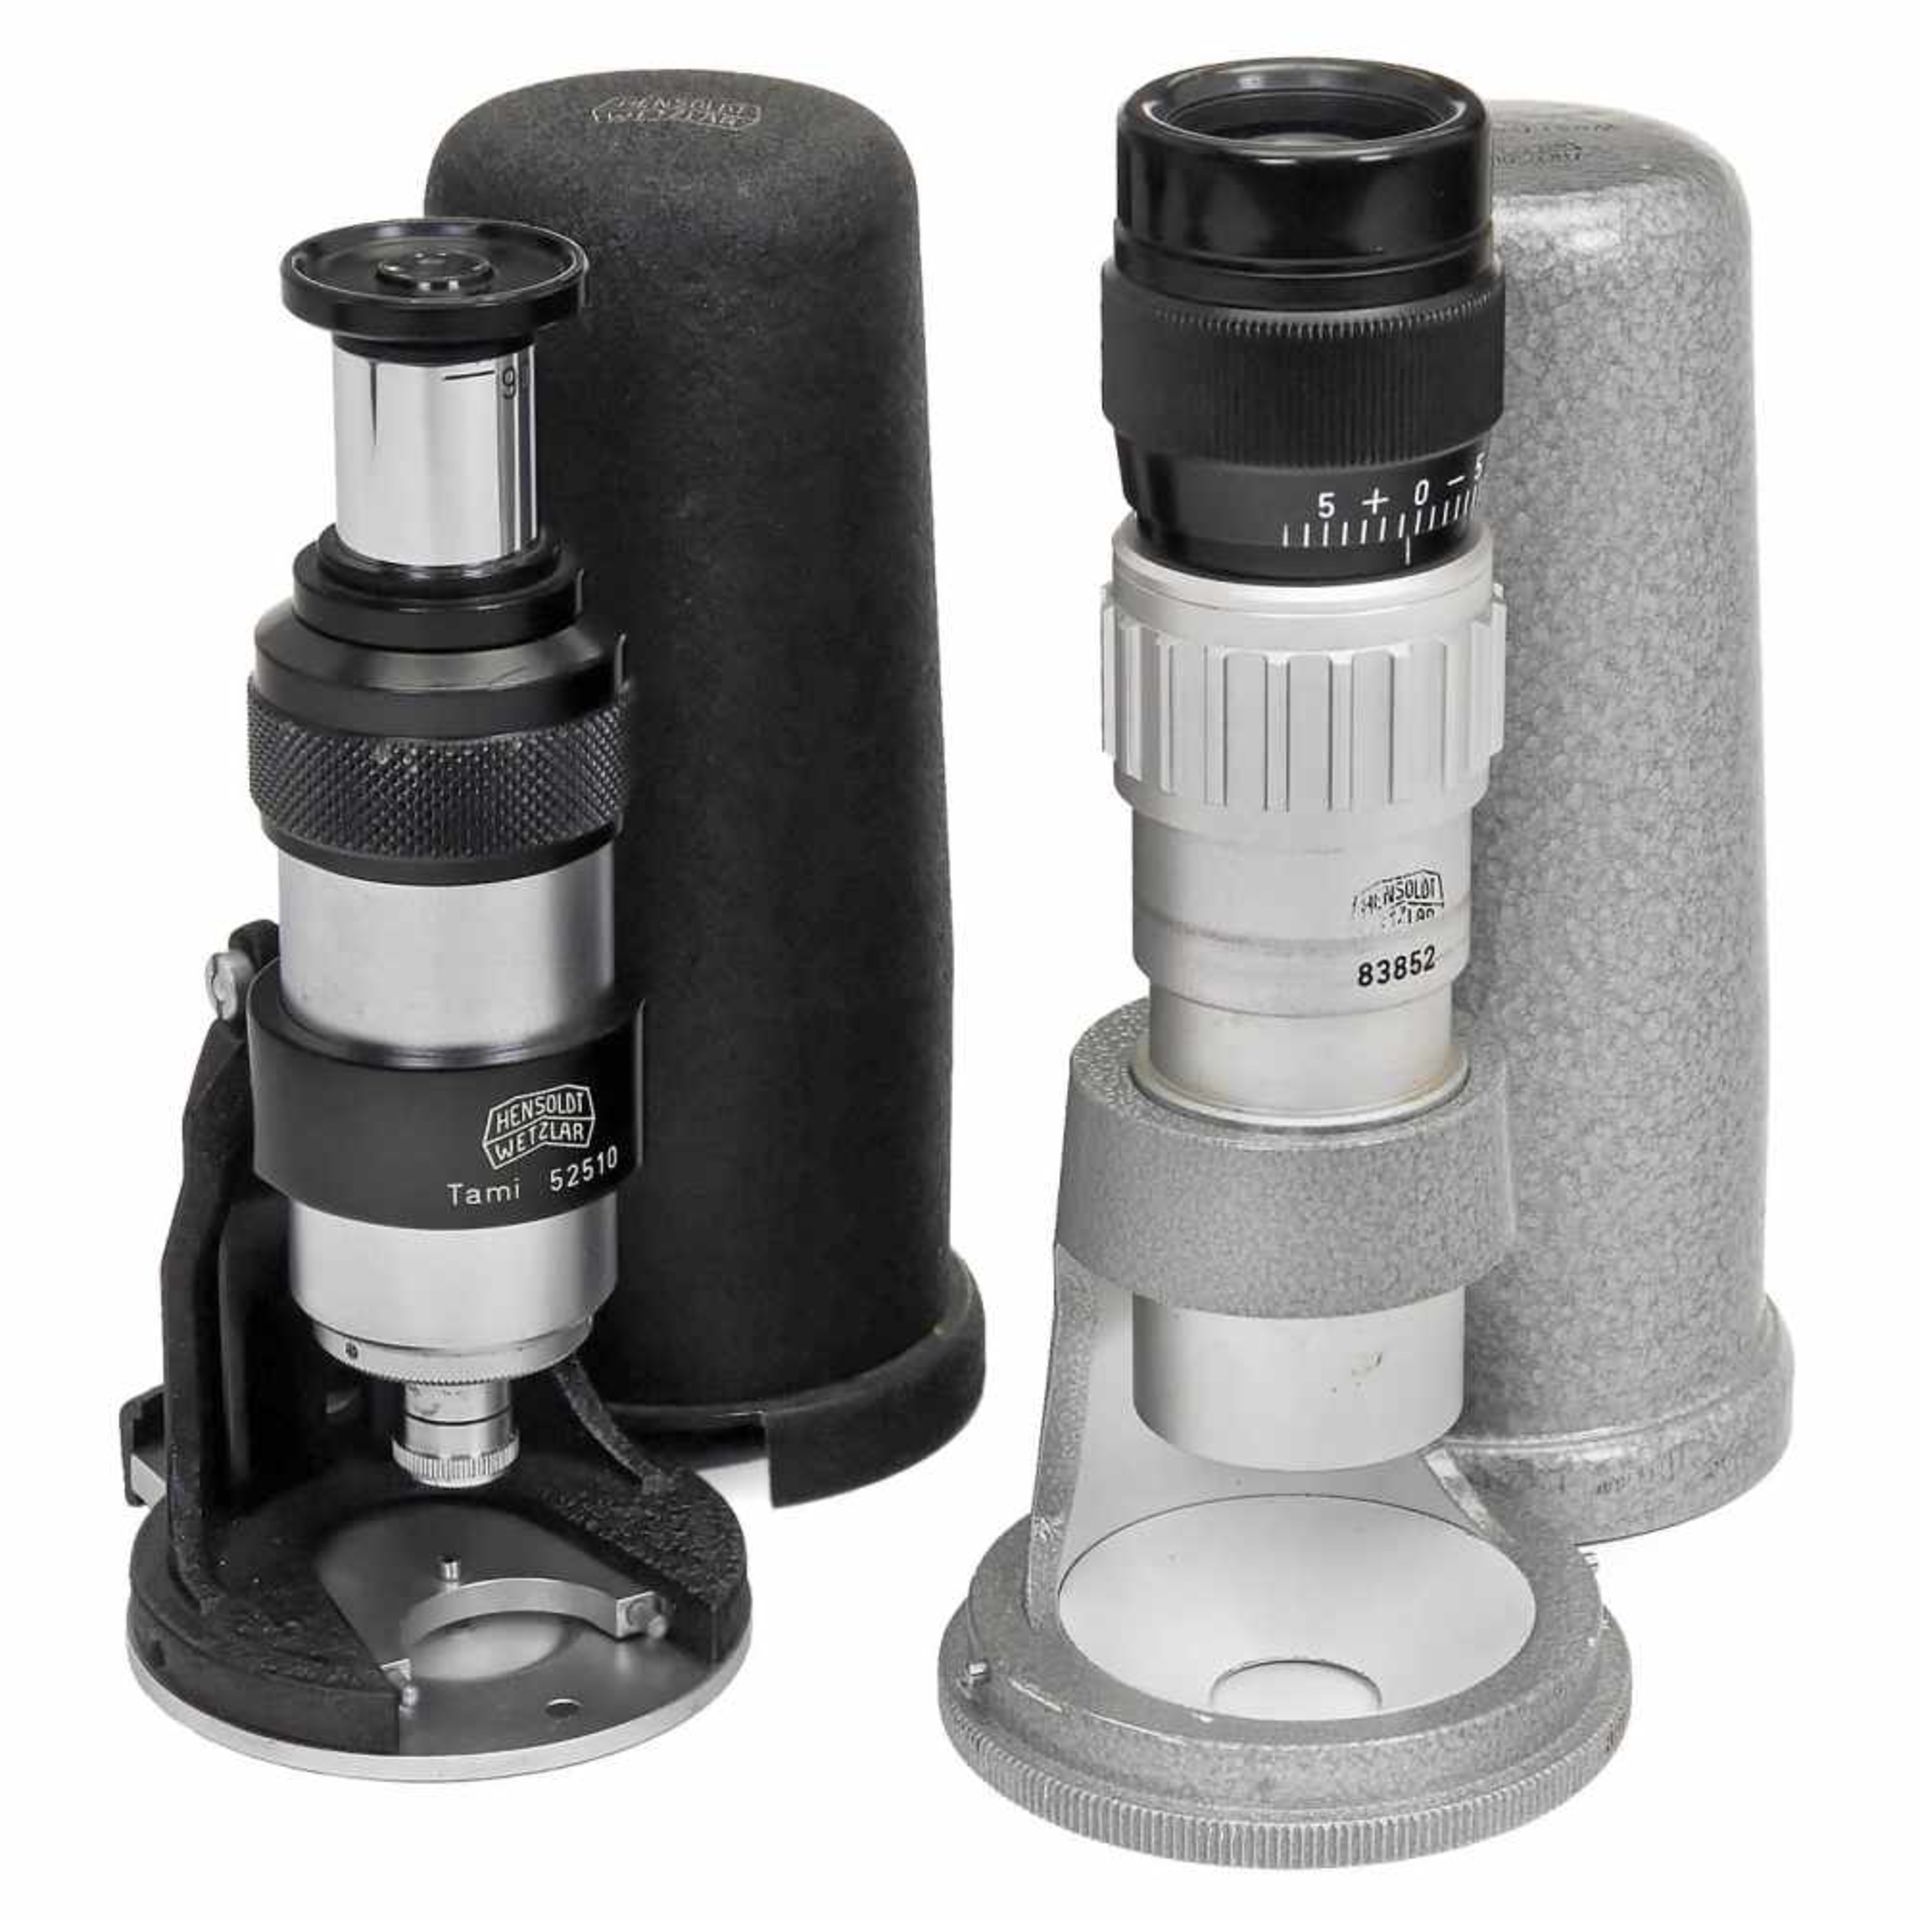 Hensoldt Tami Pancratic Pocket Microscope, c. 1950Wetzlar, serial no. 52510, double extendable tube,